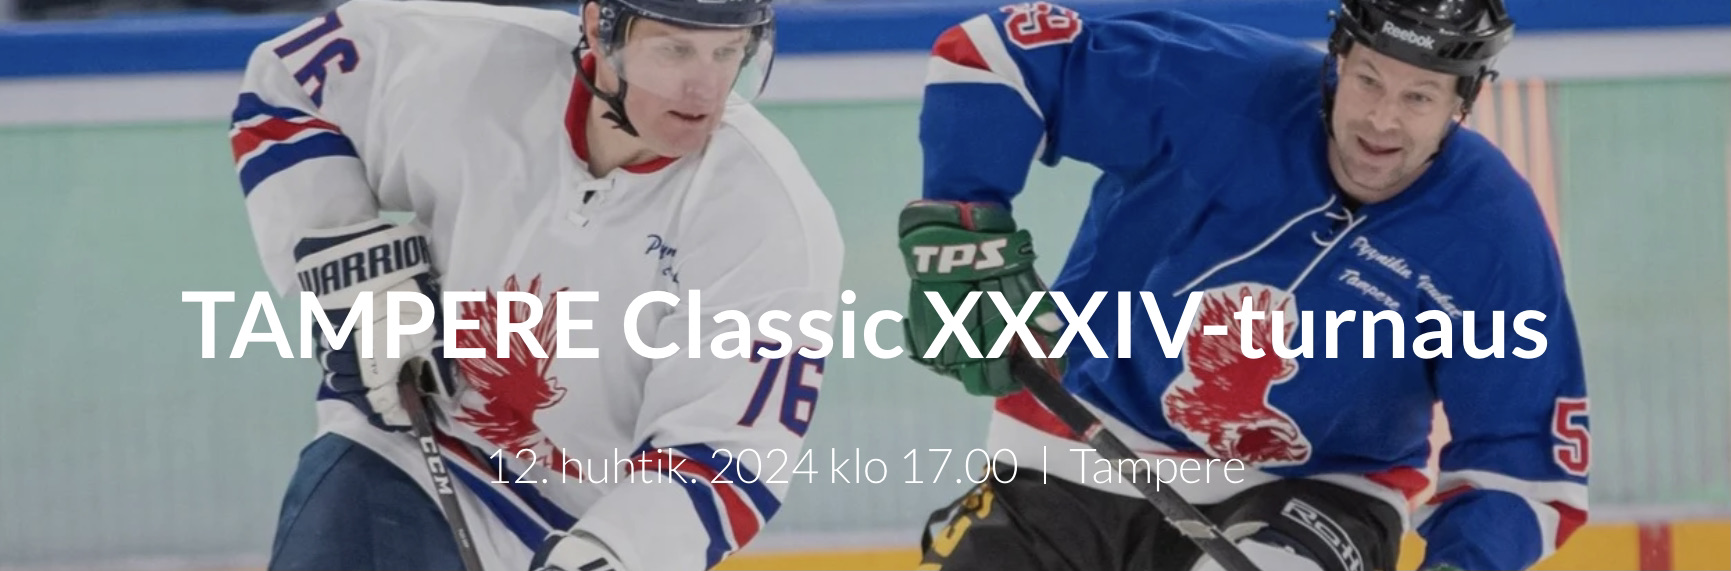 Tampere Classic XXXIV-turnaus 12.4-14.4.2024